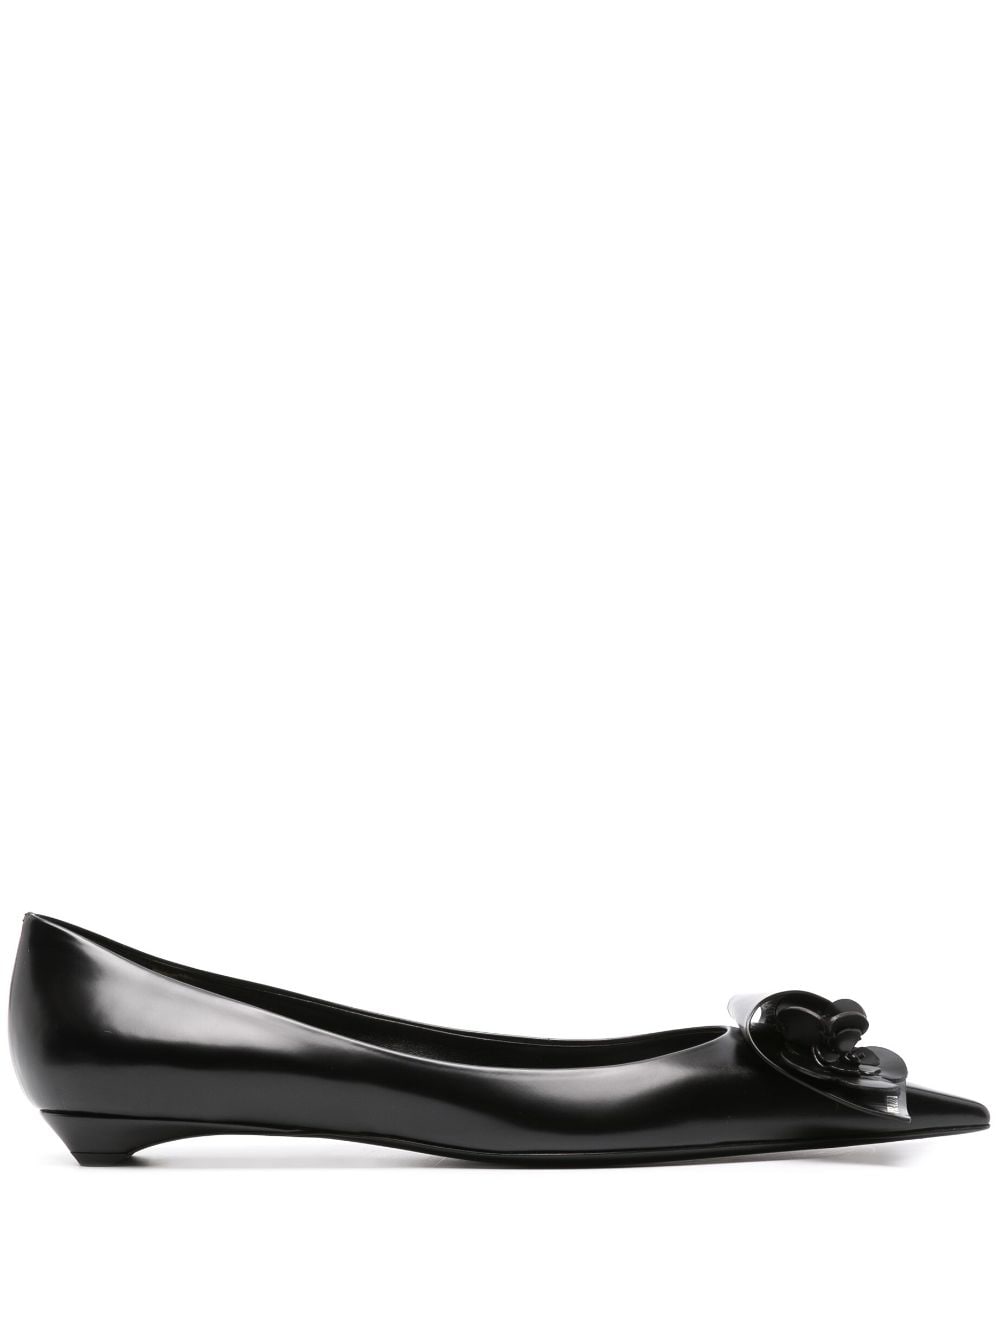 Image 1 of Prada flower-appliqué leather ballerina shoes